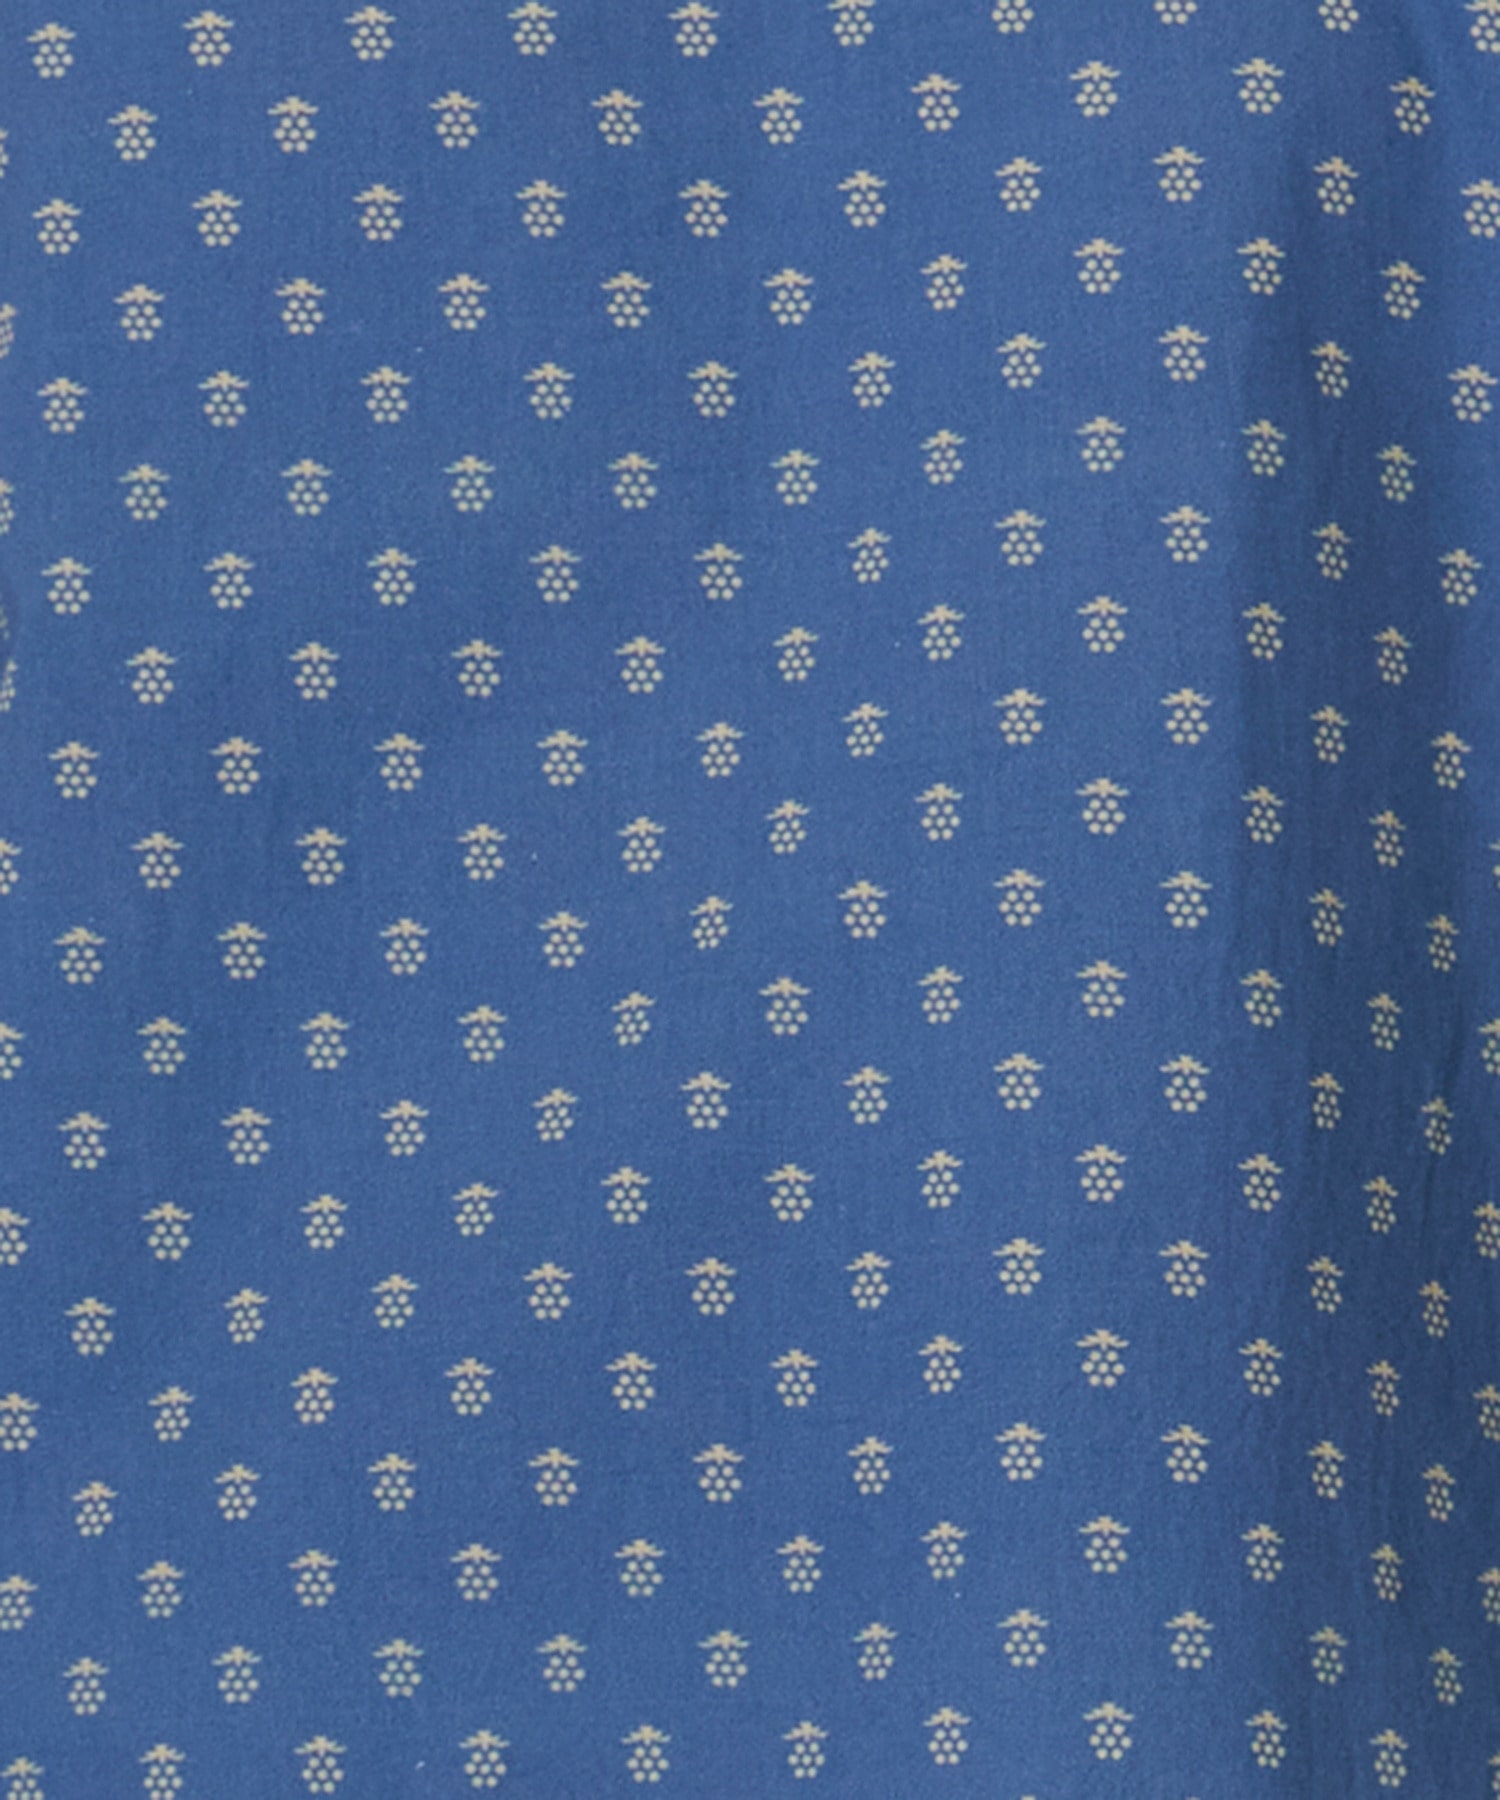 【LOISIR】インドコットンポプリンハンドスモッキングスカート 詳細画像 ブルー系その他 8